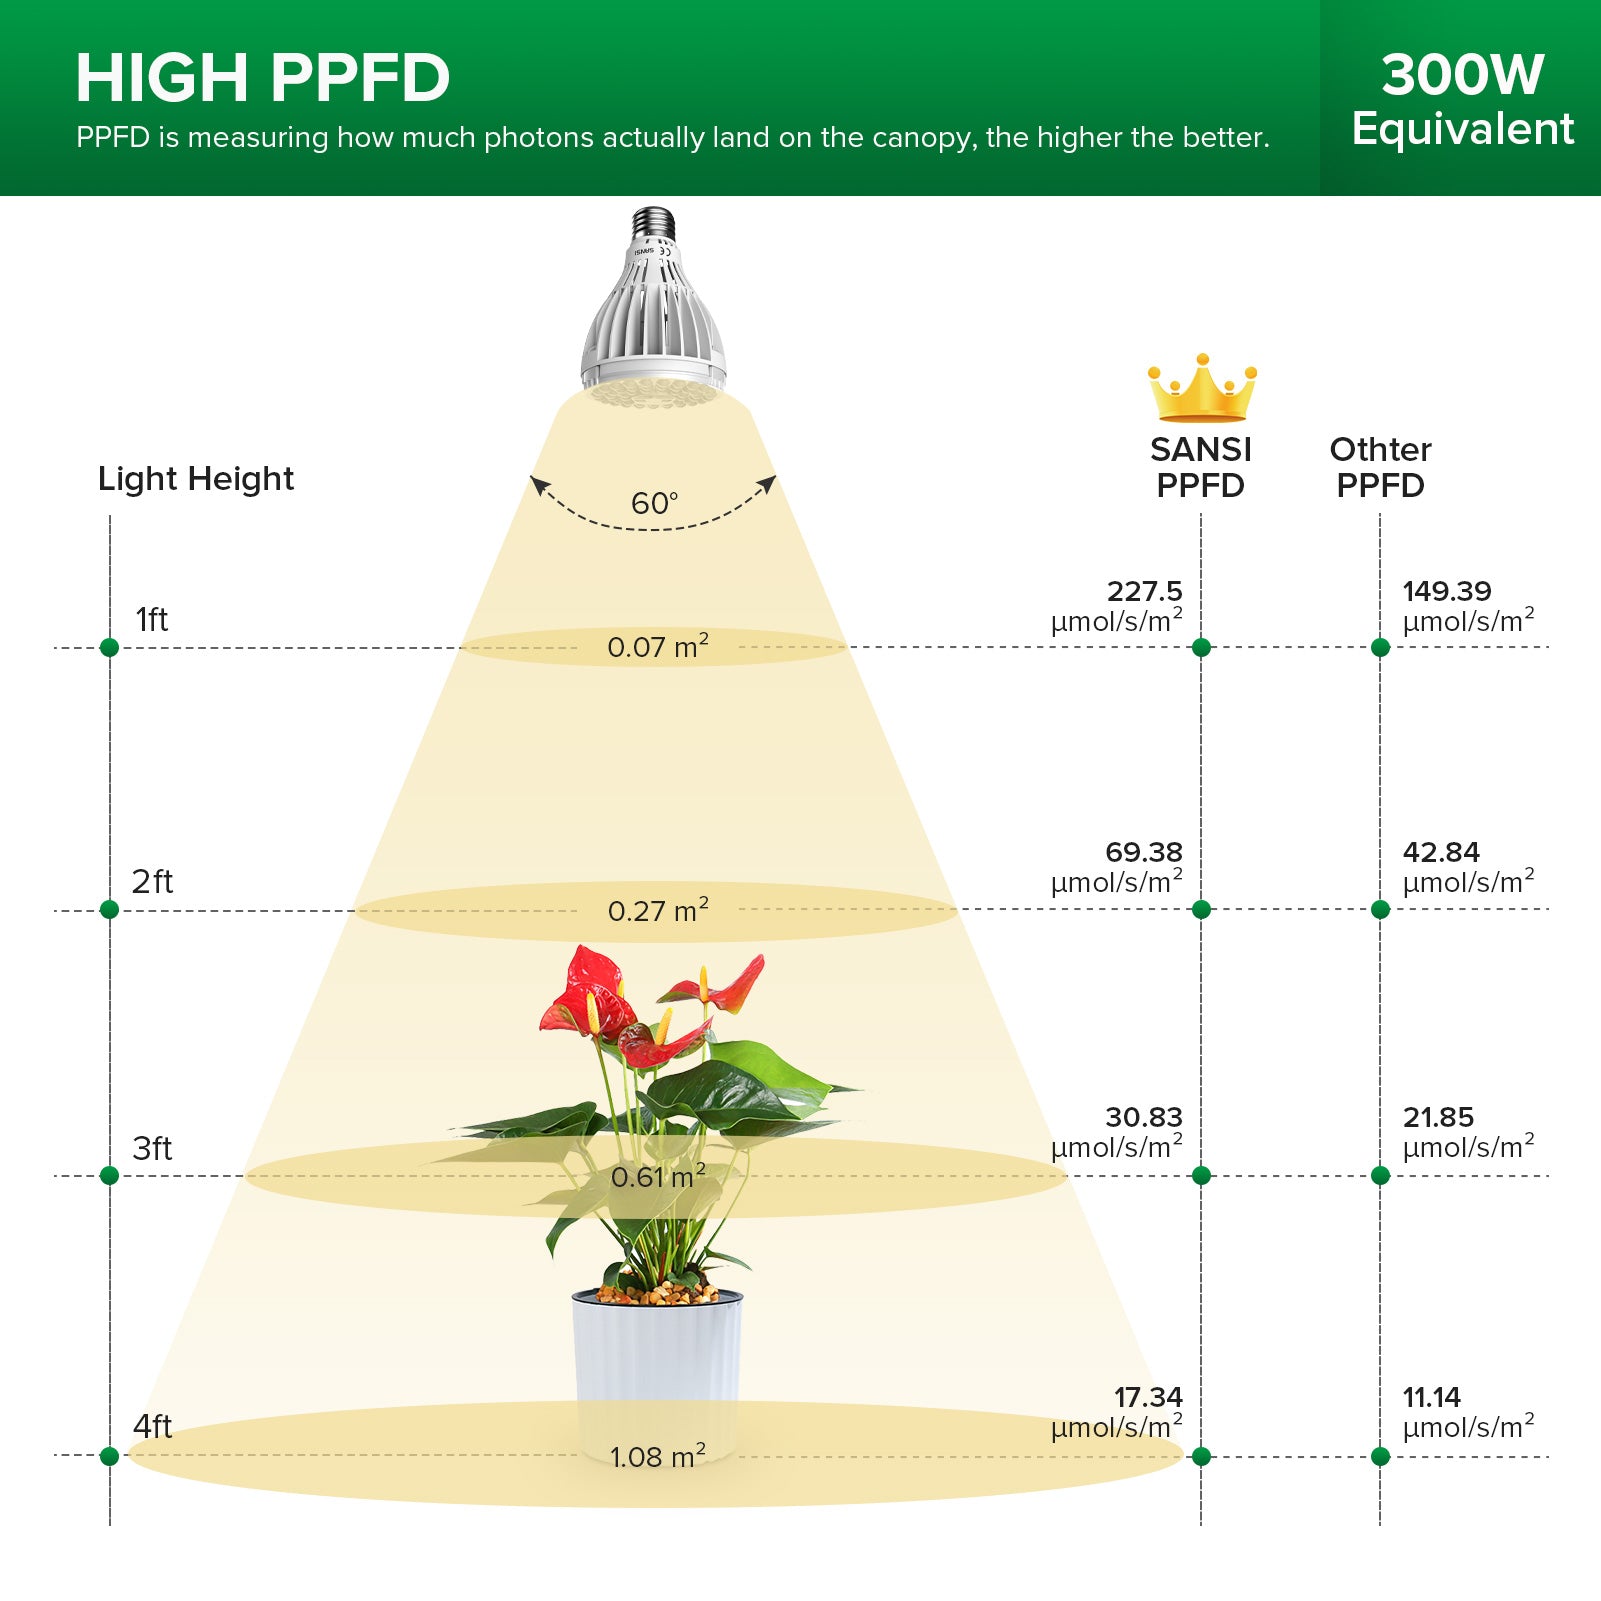 PAR25 24W LED Grow Light Bulb for Seeds and Greens has high PPFD, 300W equivalent